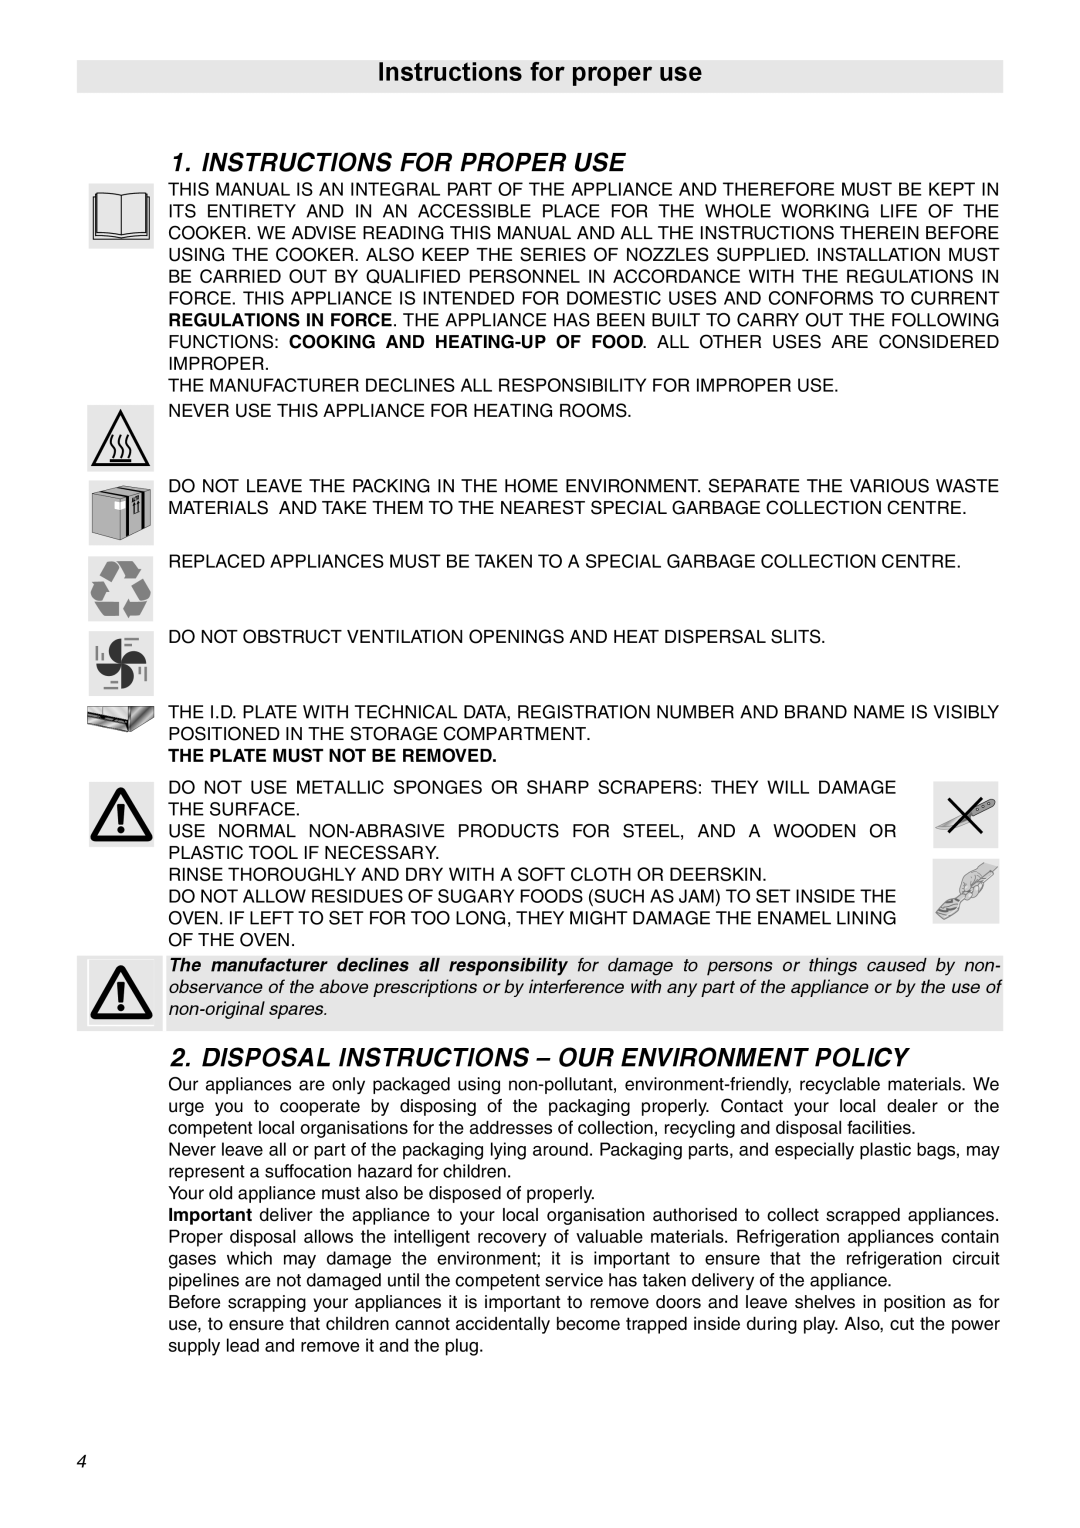 Smeg SA92MFX5 Instructions for proper use, Instructions For Proper Use, Disposal Instructions - Our Environment Policy 